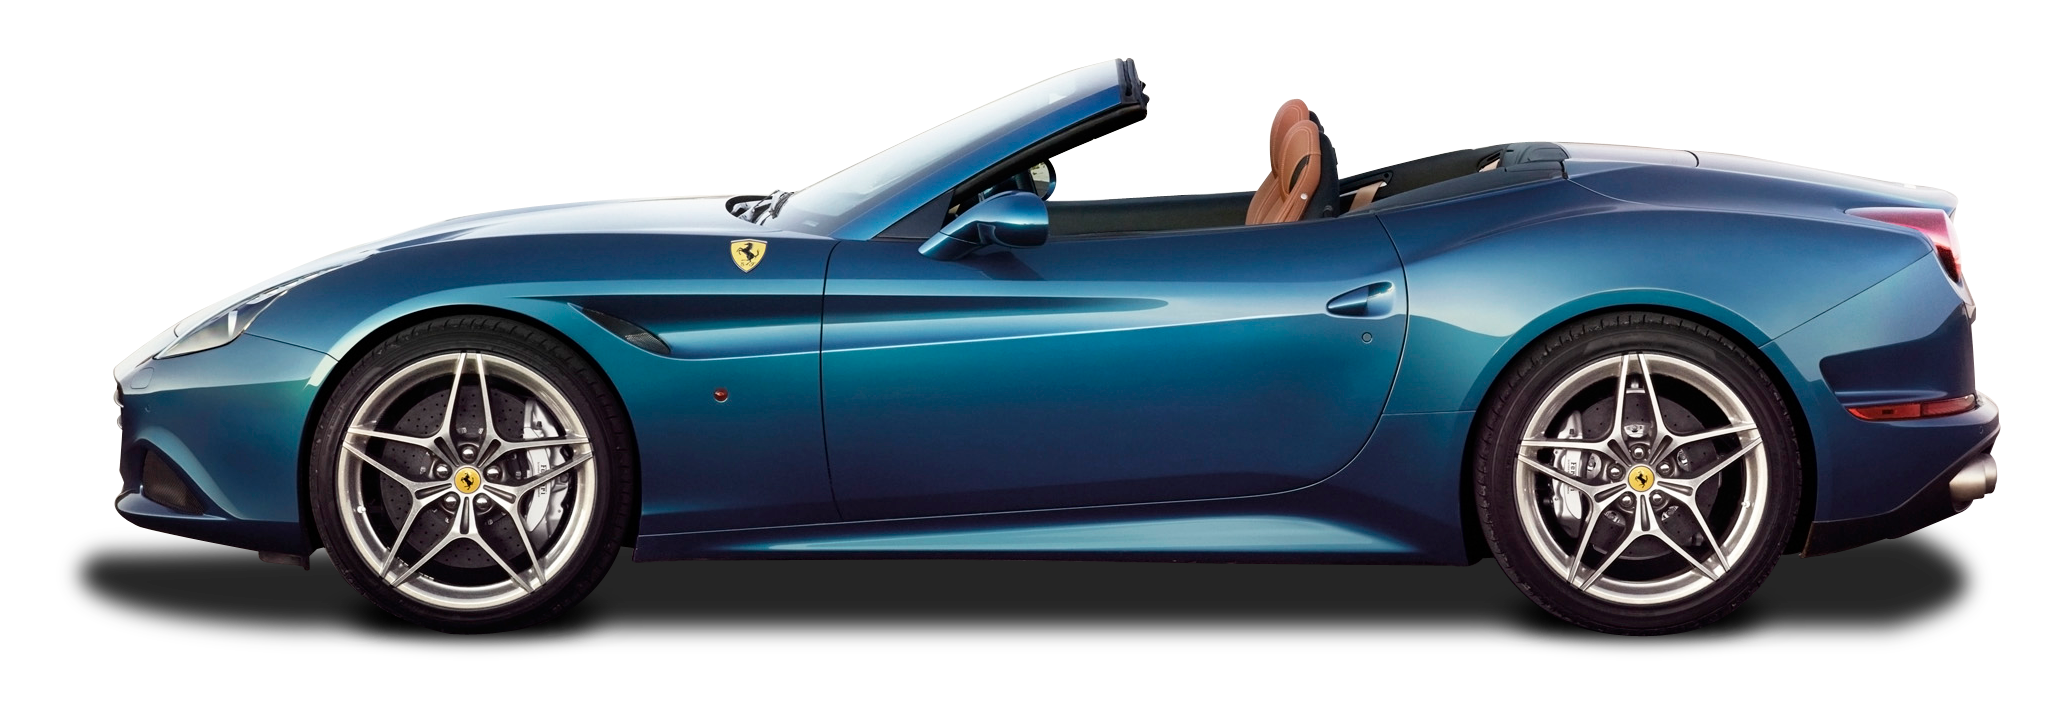 Кабриолет Ferrari PNG картина